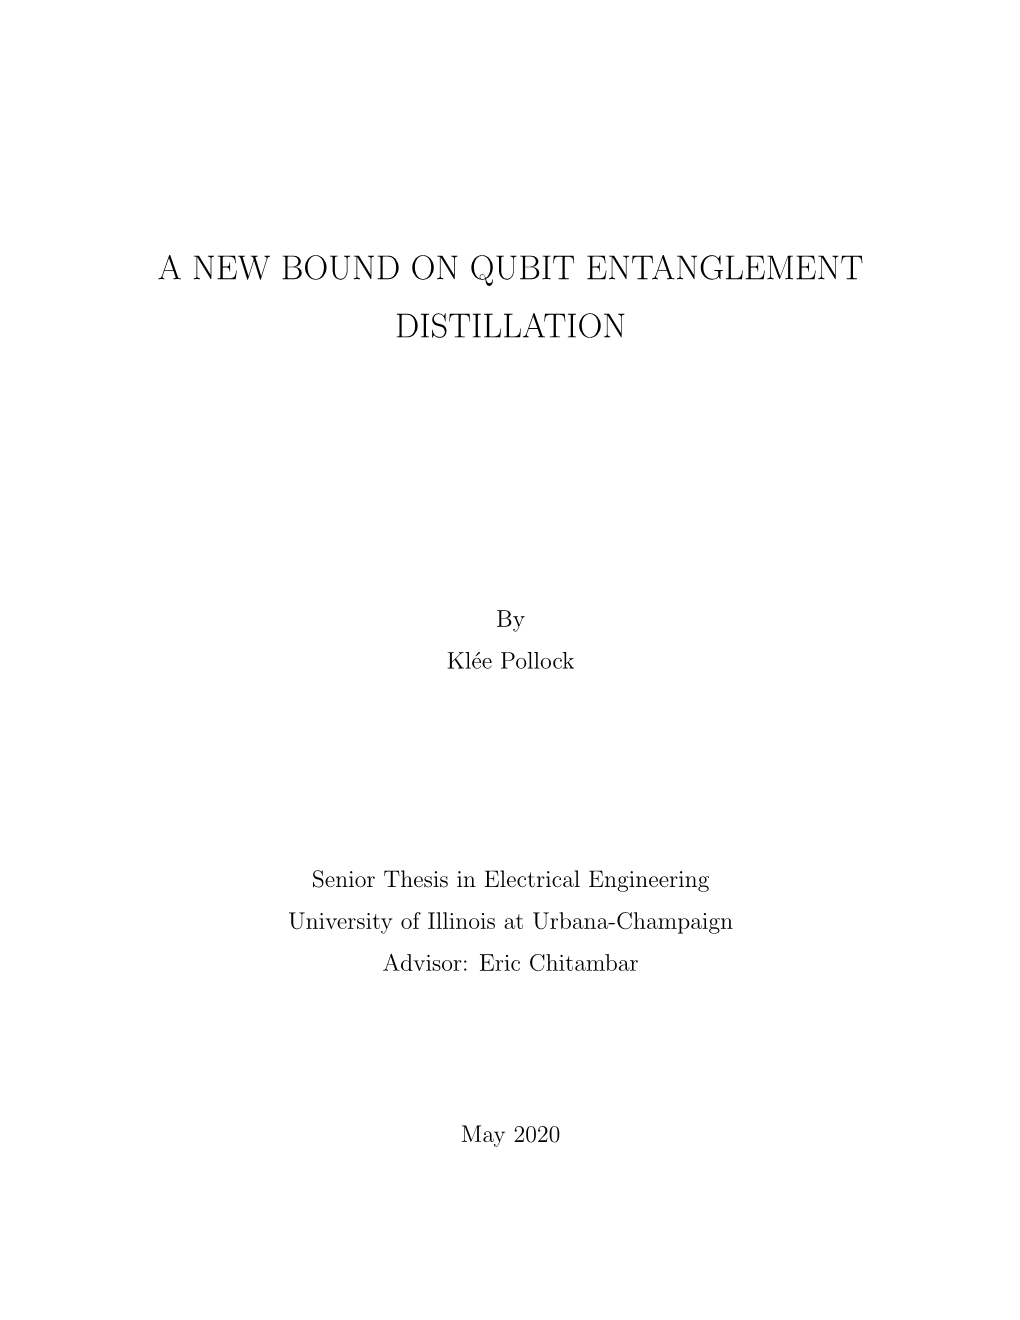 A New Bound on Qubit Entanglement Distillation